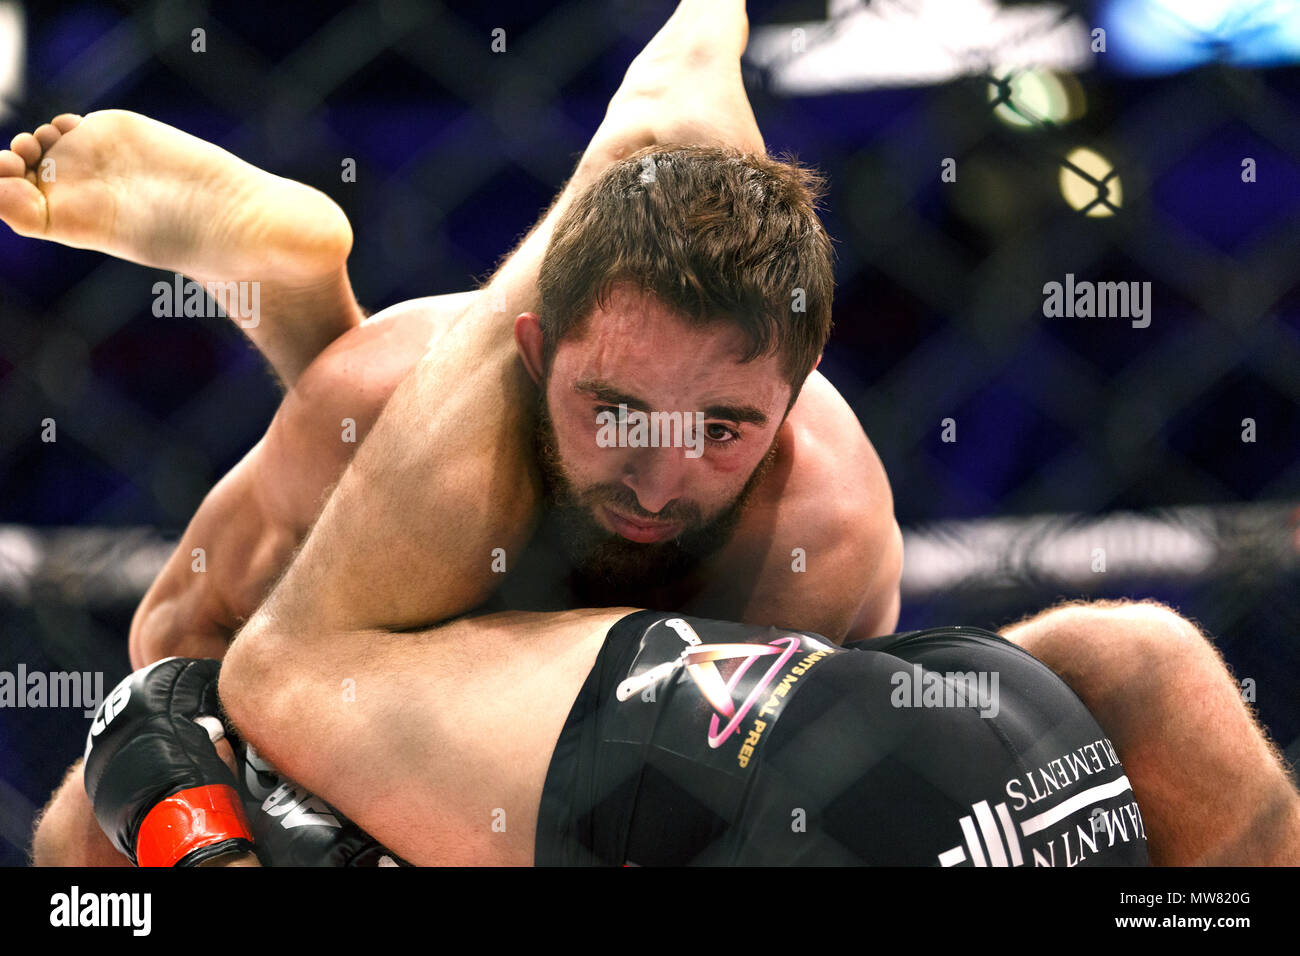 Amirkhan Adaev (top, facing camera) vs Joshua Aveles at ACB 54 in Manchester, UK. Absolute Championship Berkut, Mixed Martial Arts, MMA fight. Stock Photo